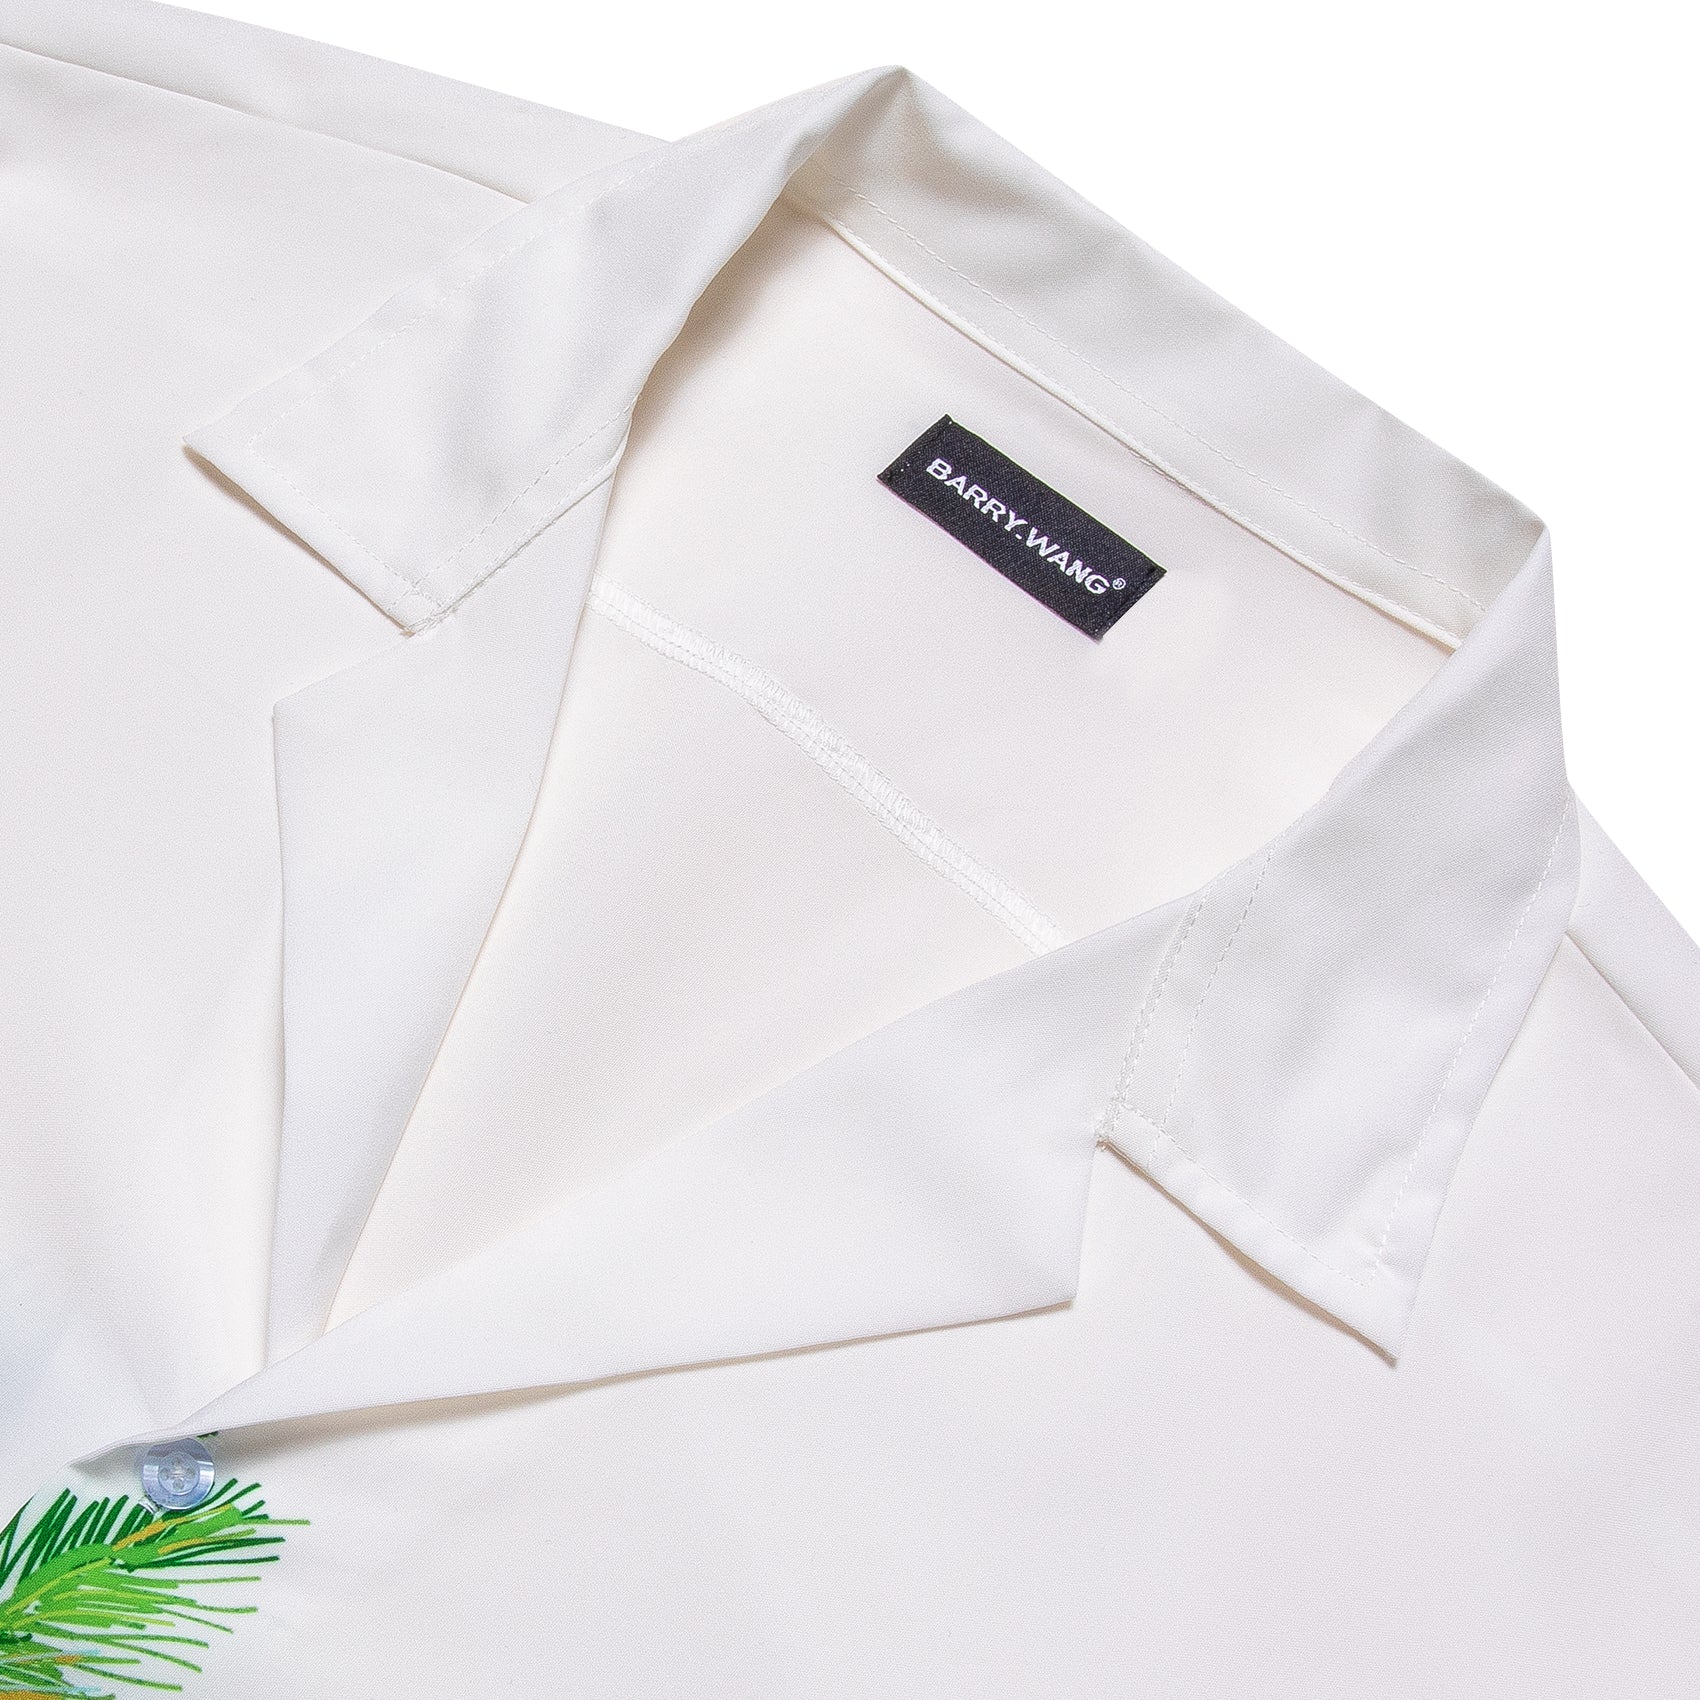 Barry Wang Hawaiian Shirts Beach Coconut Trees Mens Printed White Shirts